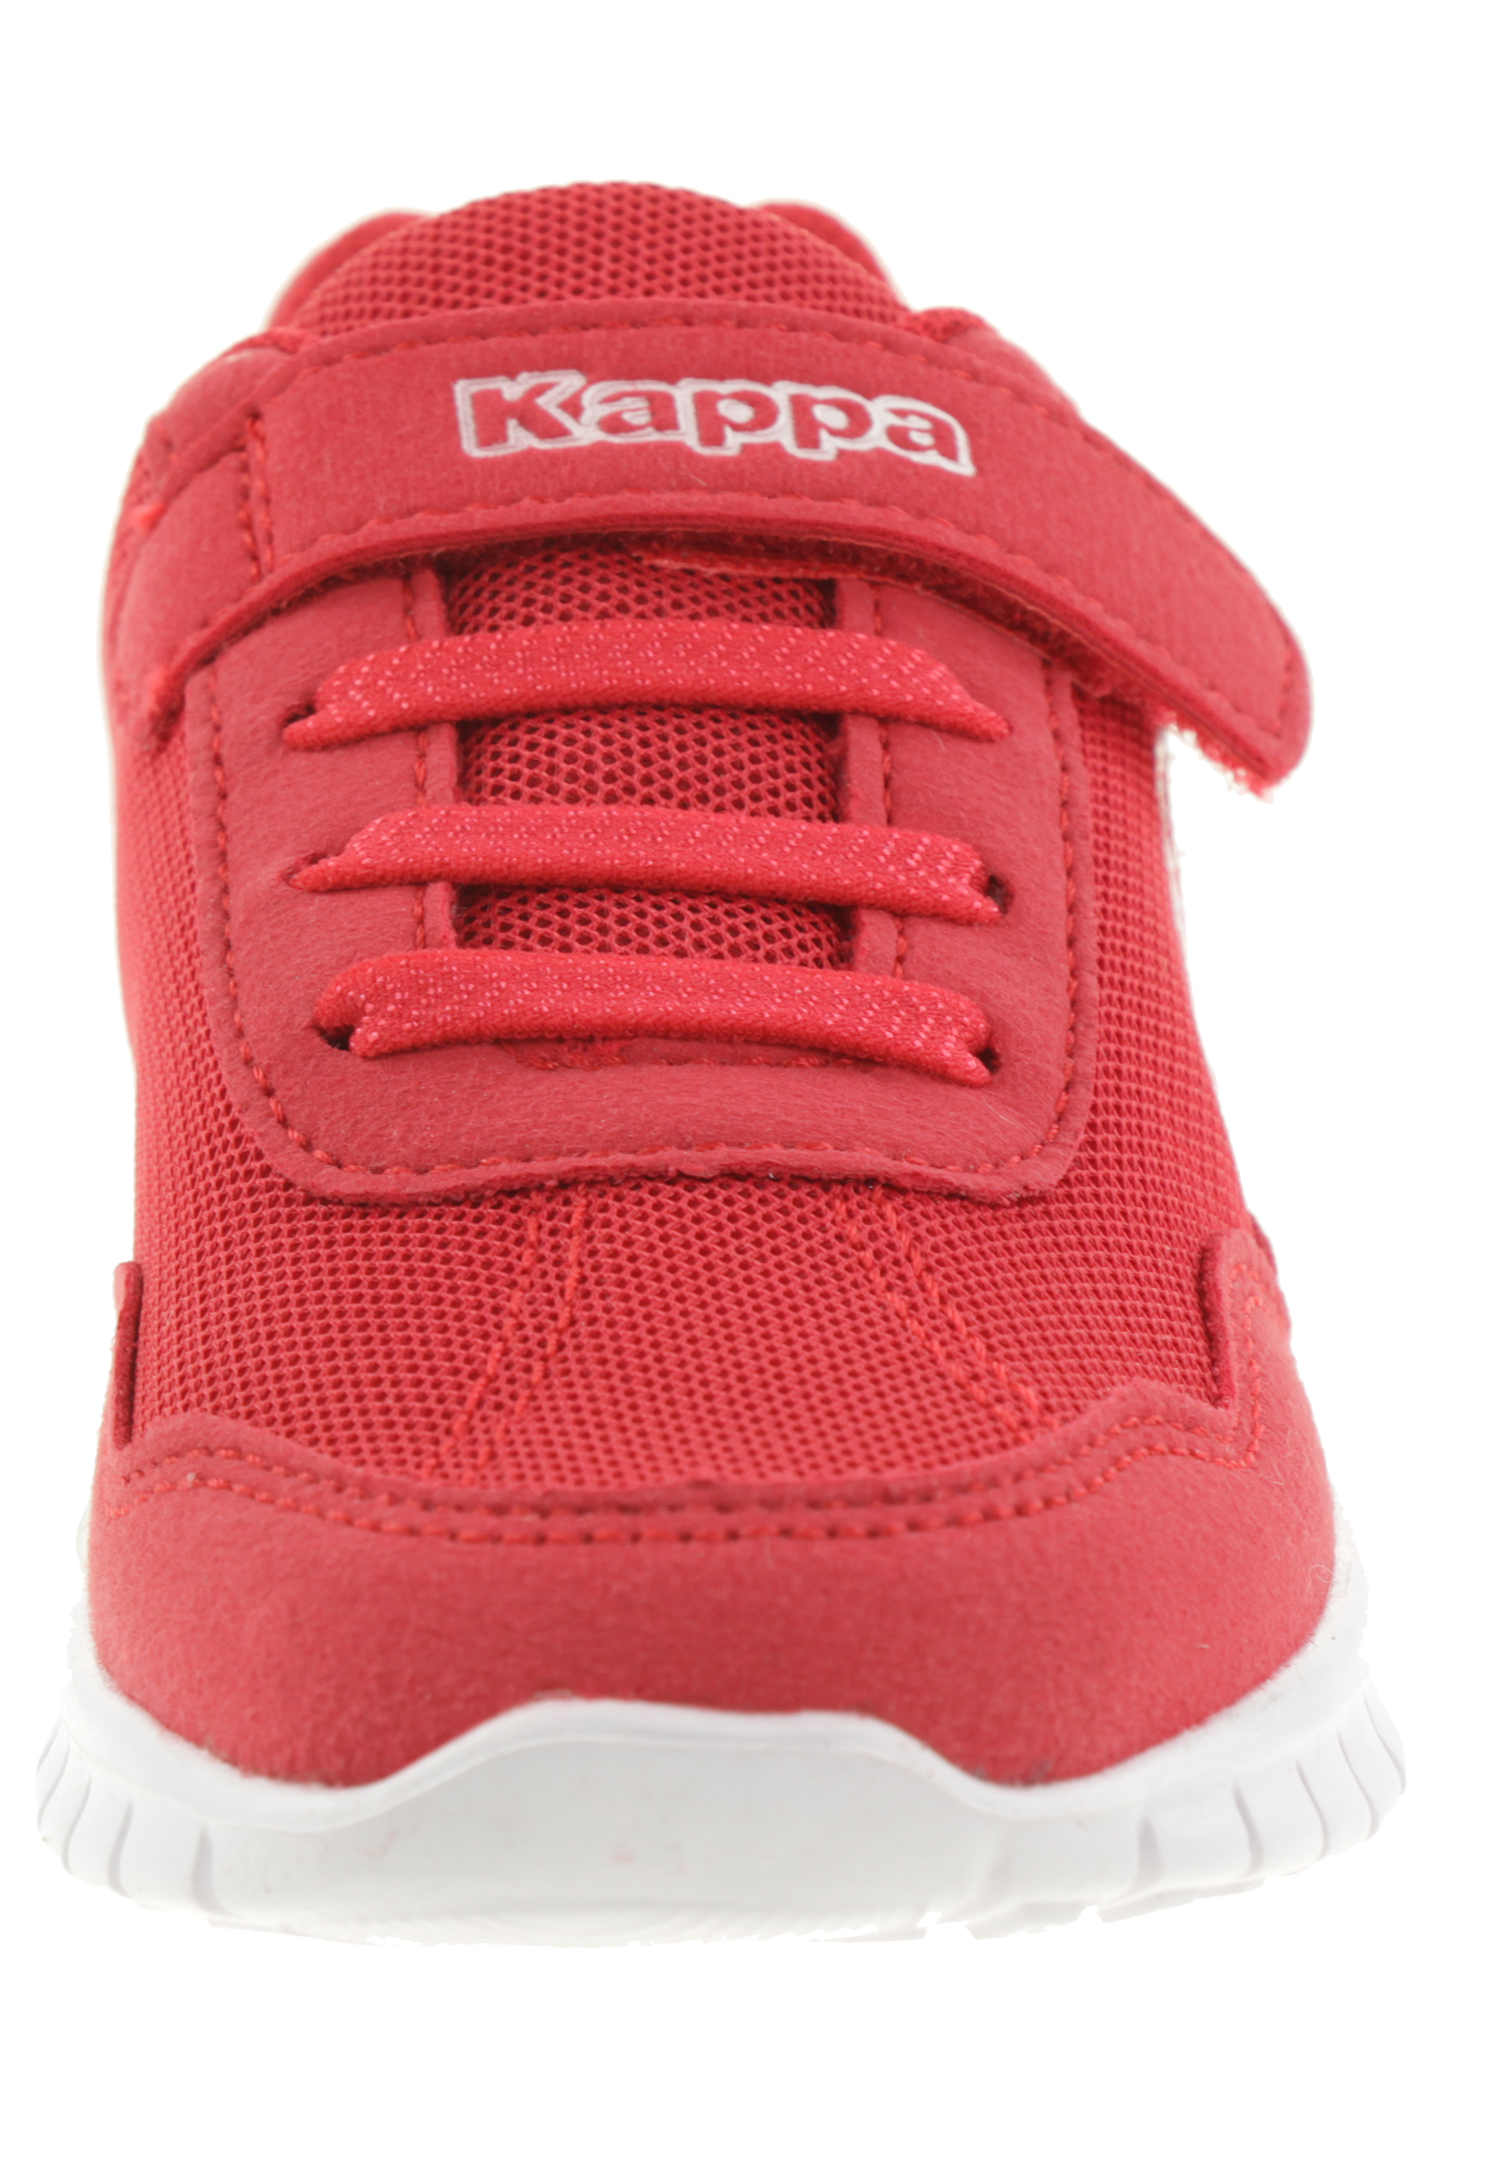 Kappa Unisex Kinder Sneaker Turnschuhe STYLECODE: 260604K Rot / Weiß